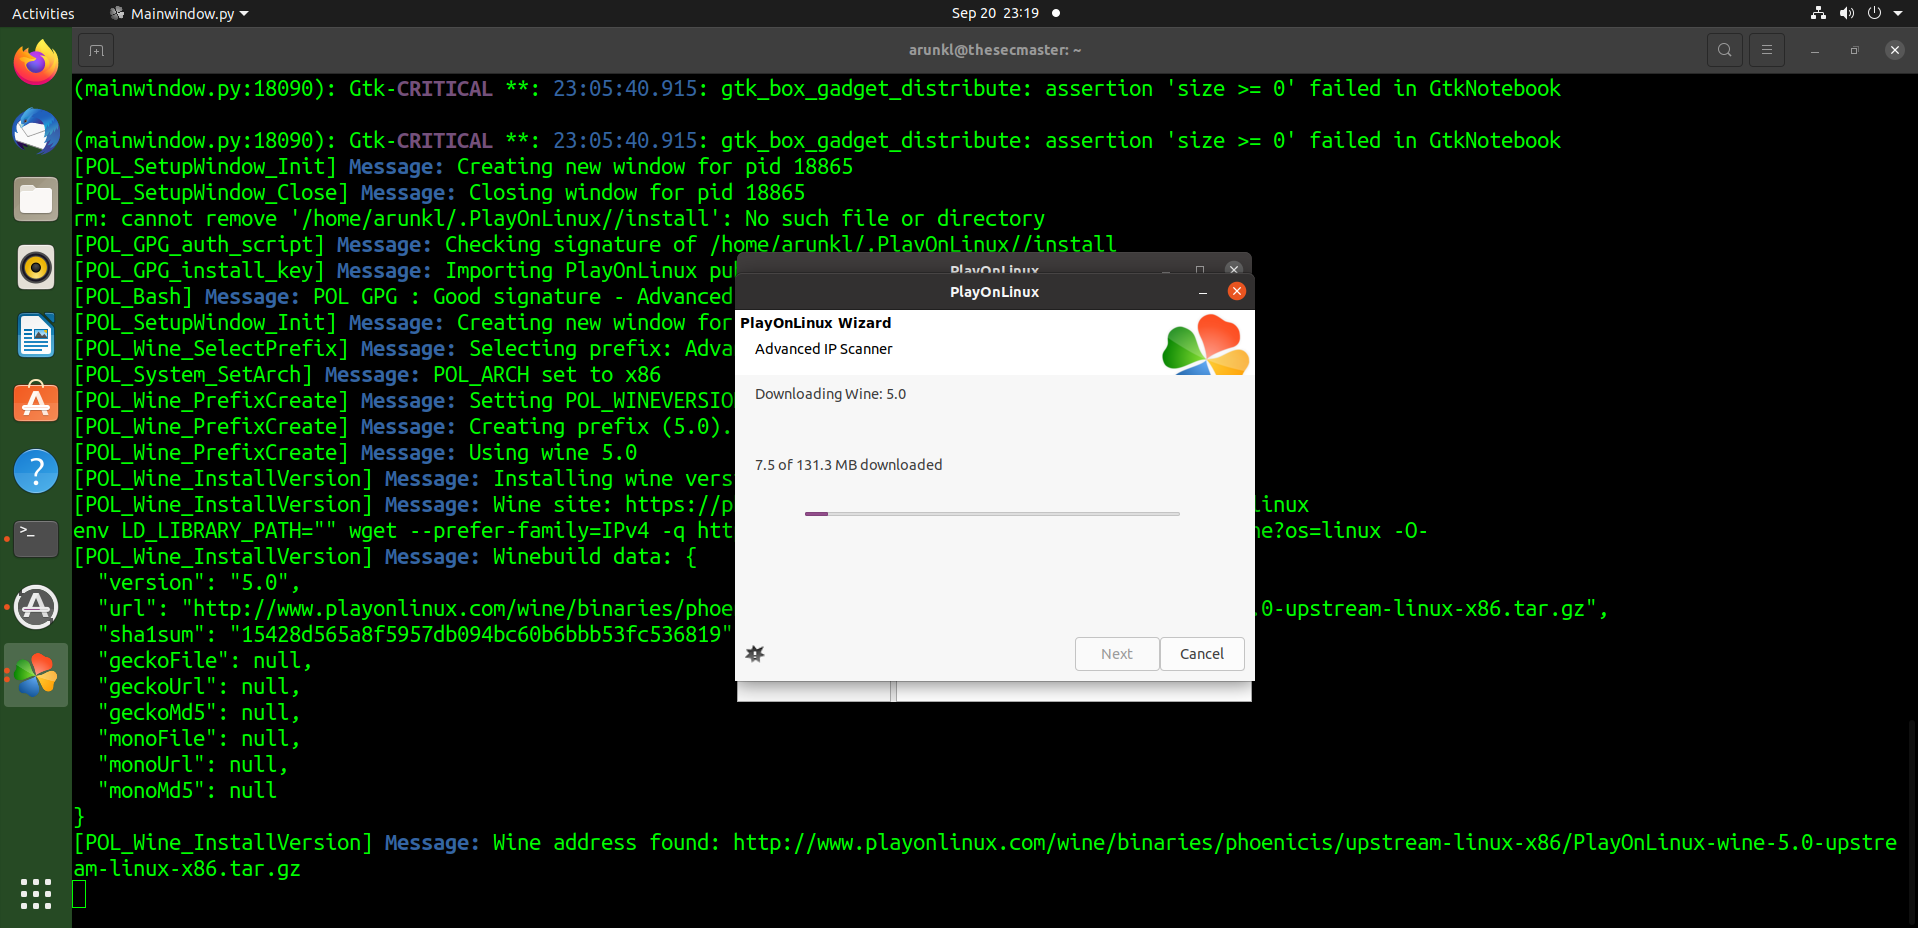 Installing Apps On Playonlinux On Ubuntu